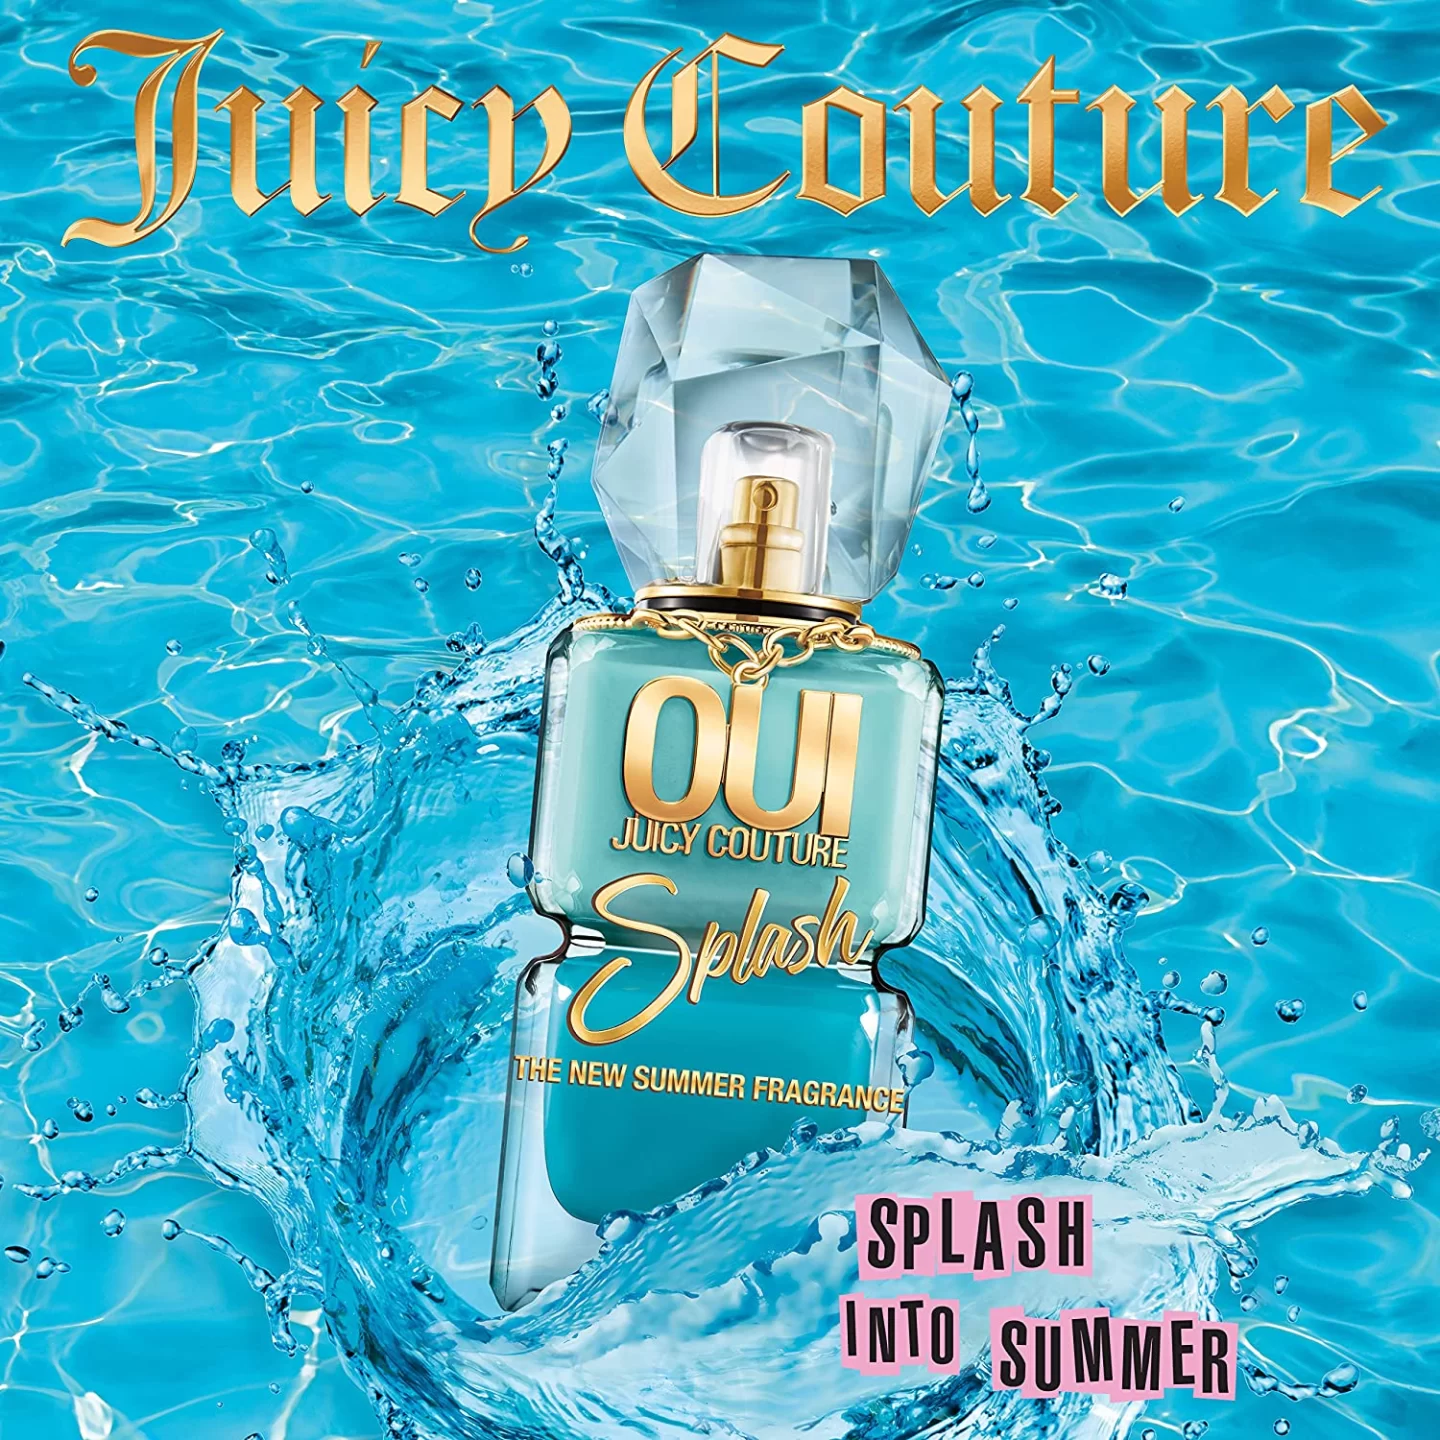 Oui Splash Juicy Couture
Best Pineapple Perfumes